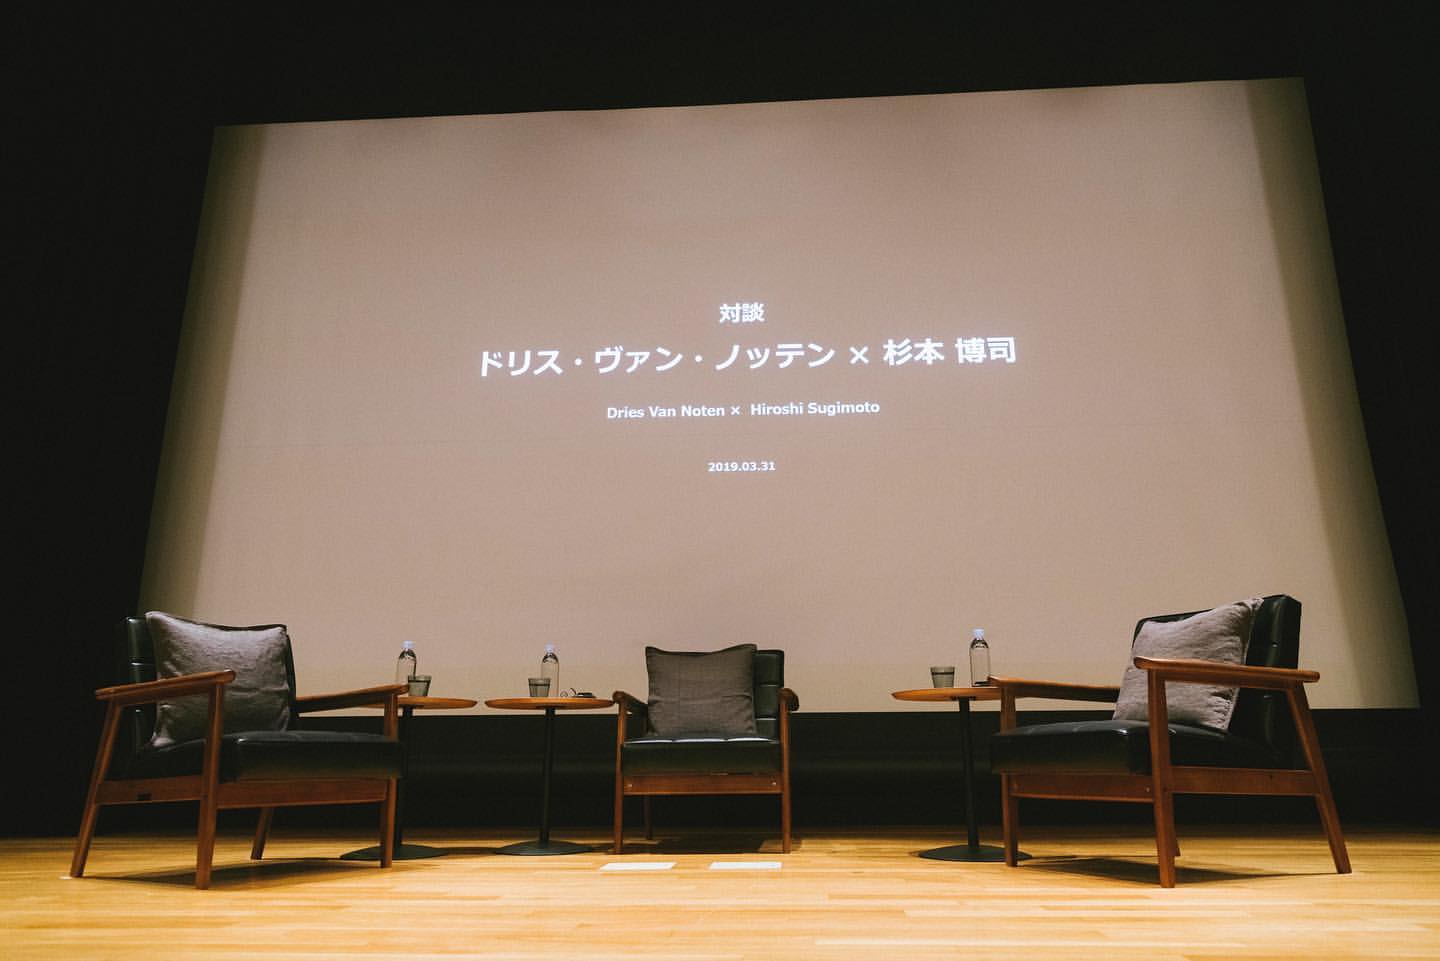 Talk session　DRIES VAN NOTEN × HIROSHI SUGIMOTO